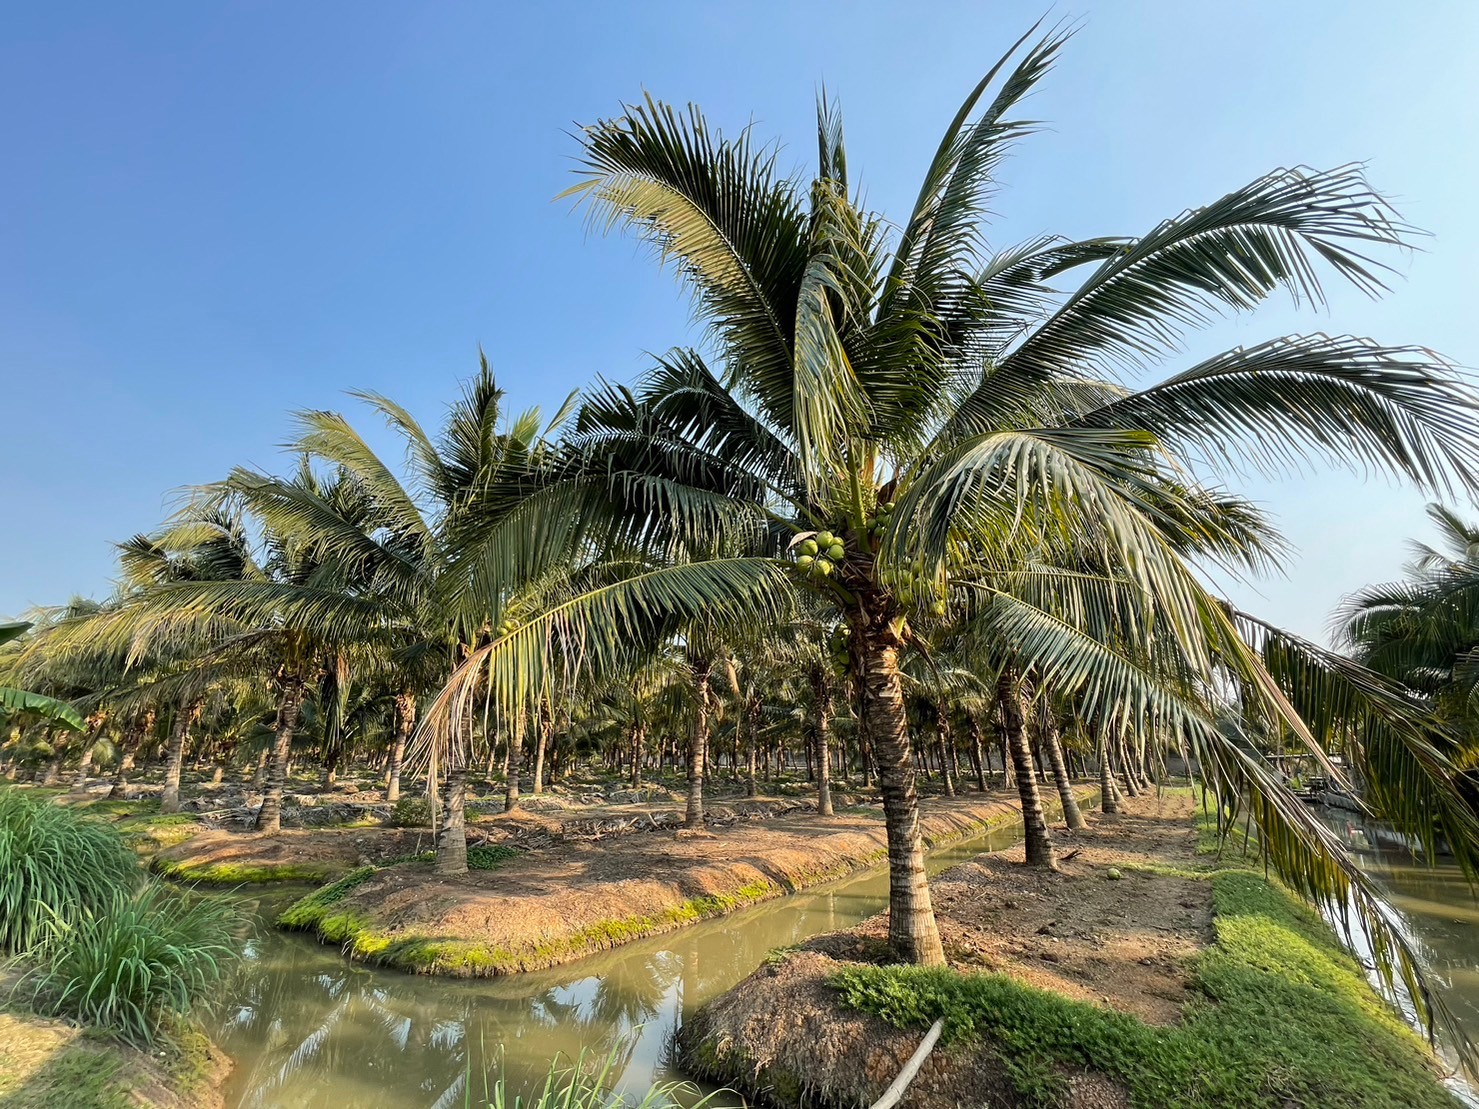 Intercropping can boost the livelihoods of coconut farmers all year round (การปลูกพืชผสมผสานอย่างถั่วแระญี่ปุ่น ผัก และสมุนไพรพื้นบ้านช่วยสร้างรายได้ให้กับเกษตรกรสวนมะพร้าวตลอดปี)